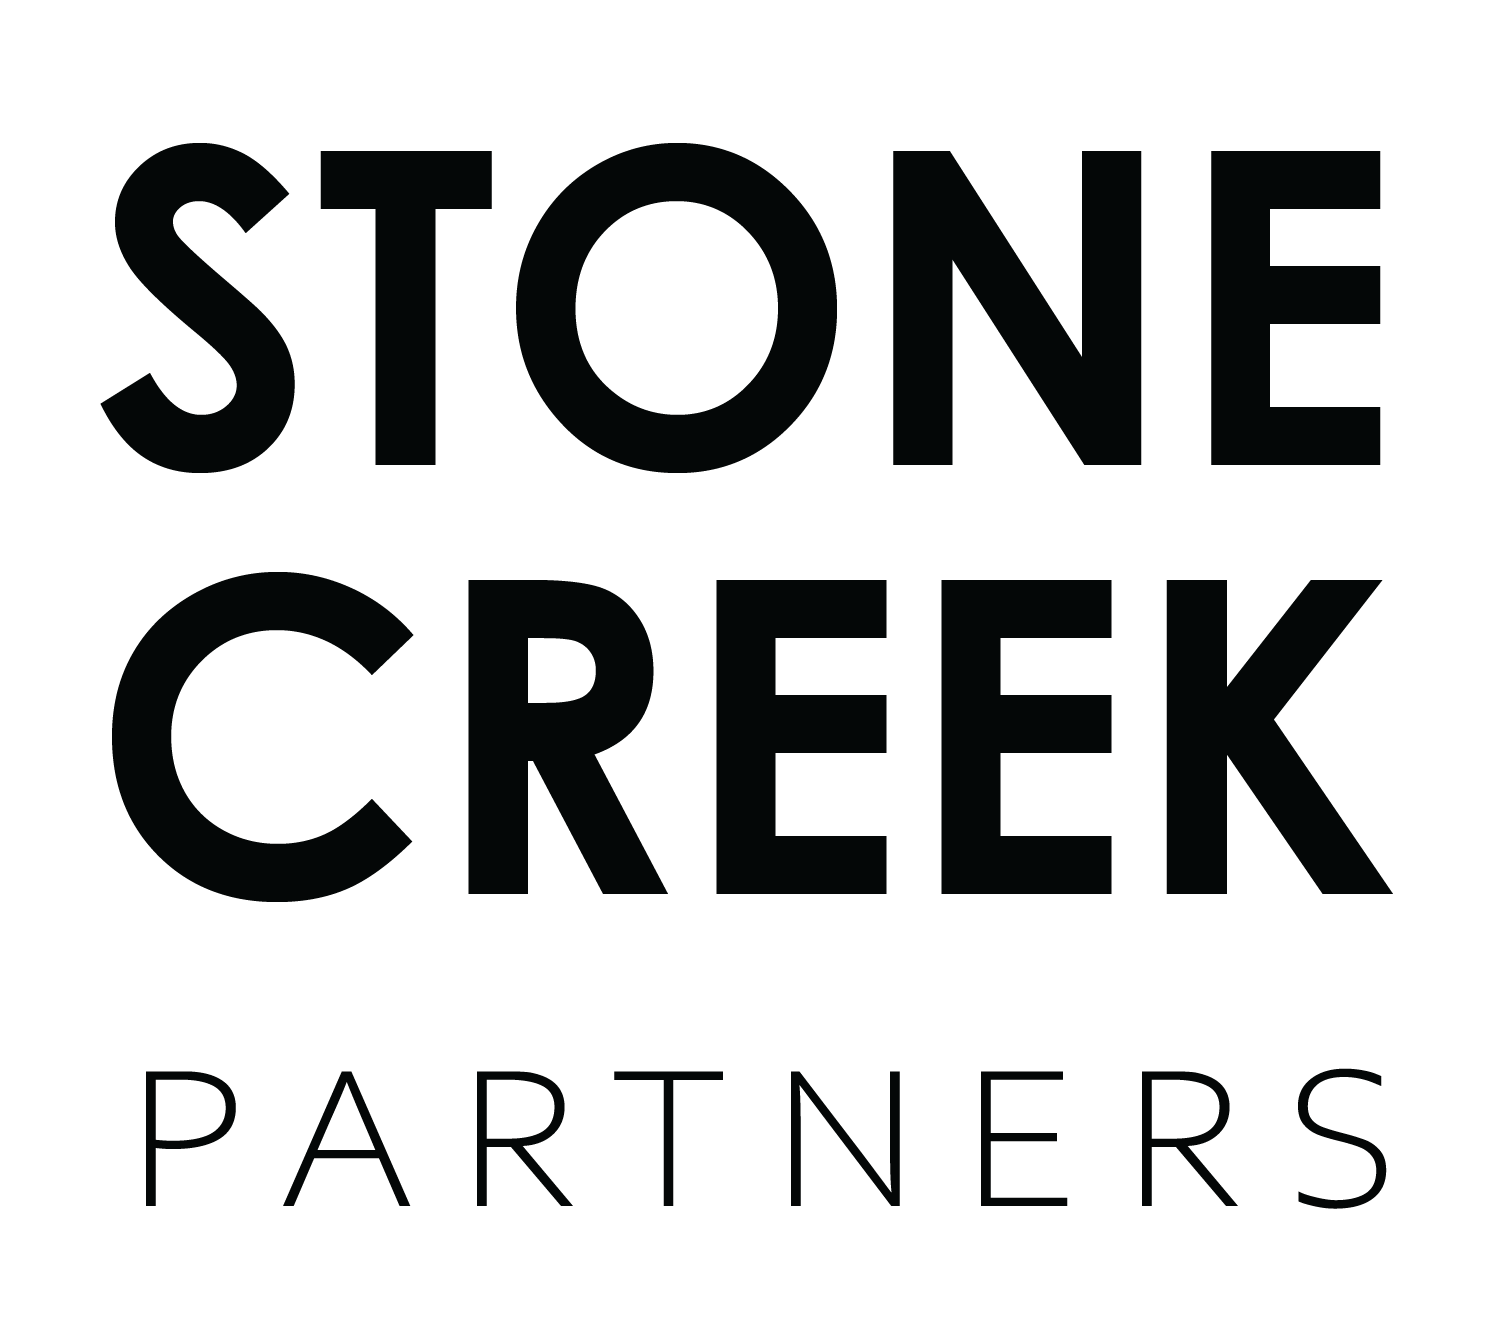 Stonecreek properties & Investment Co. Ltd